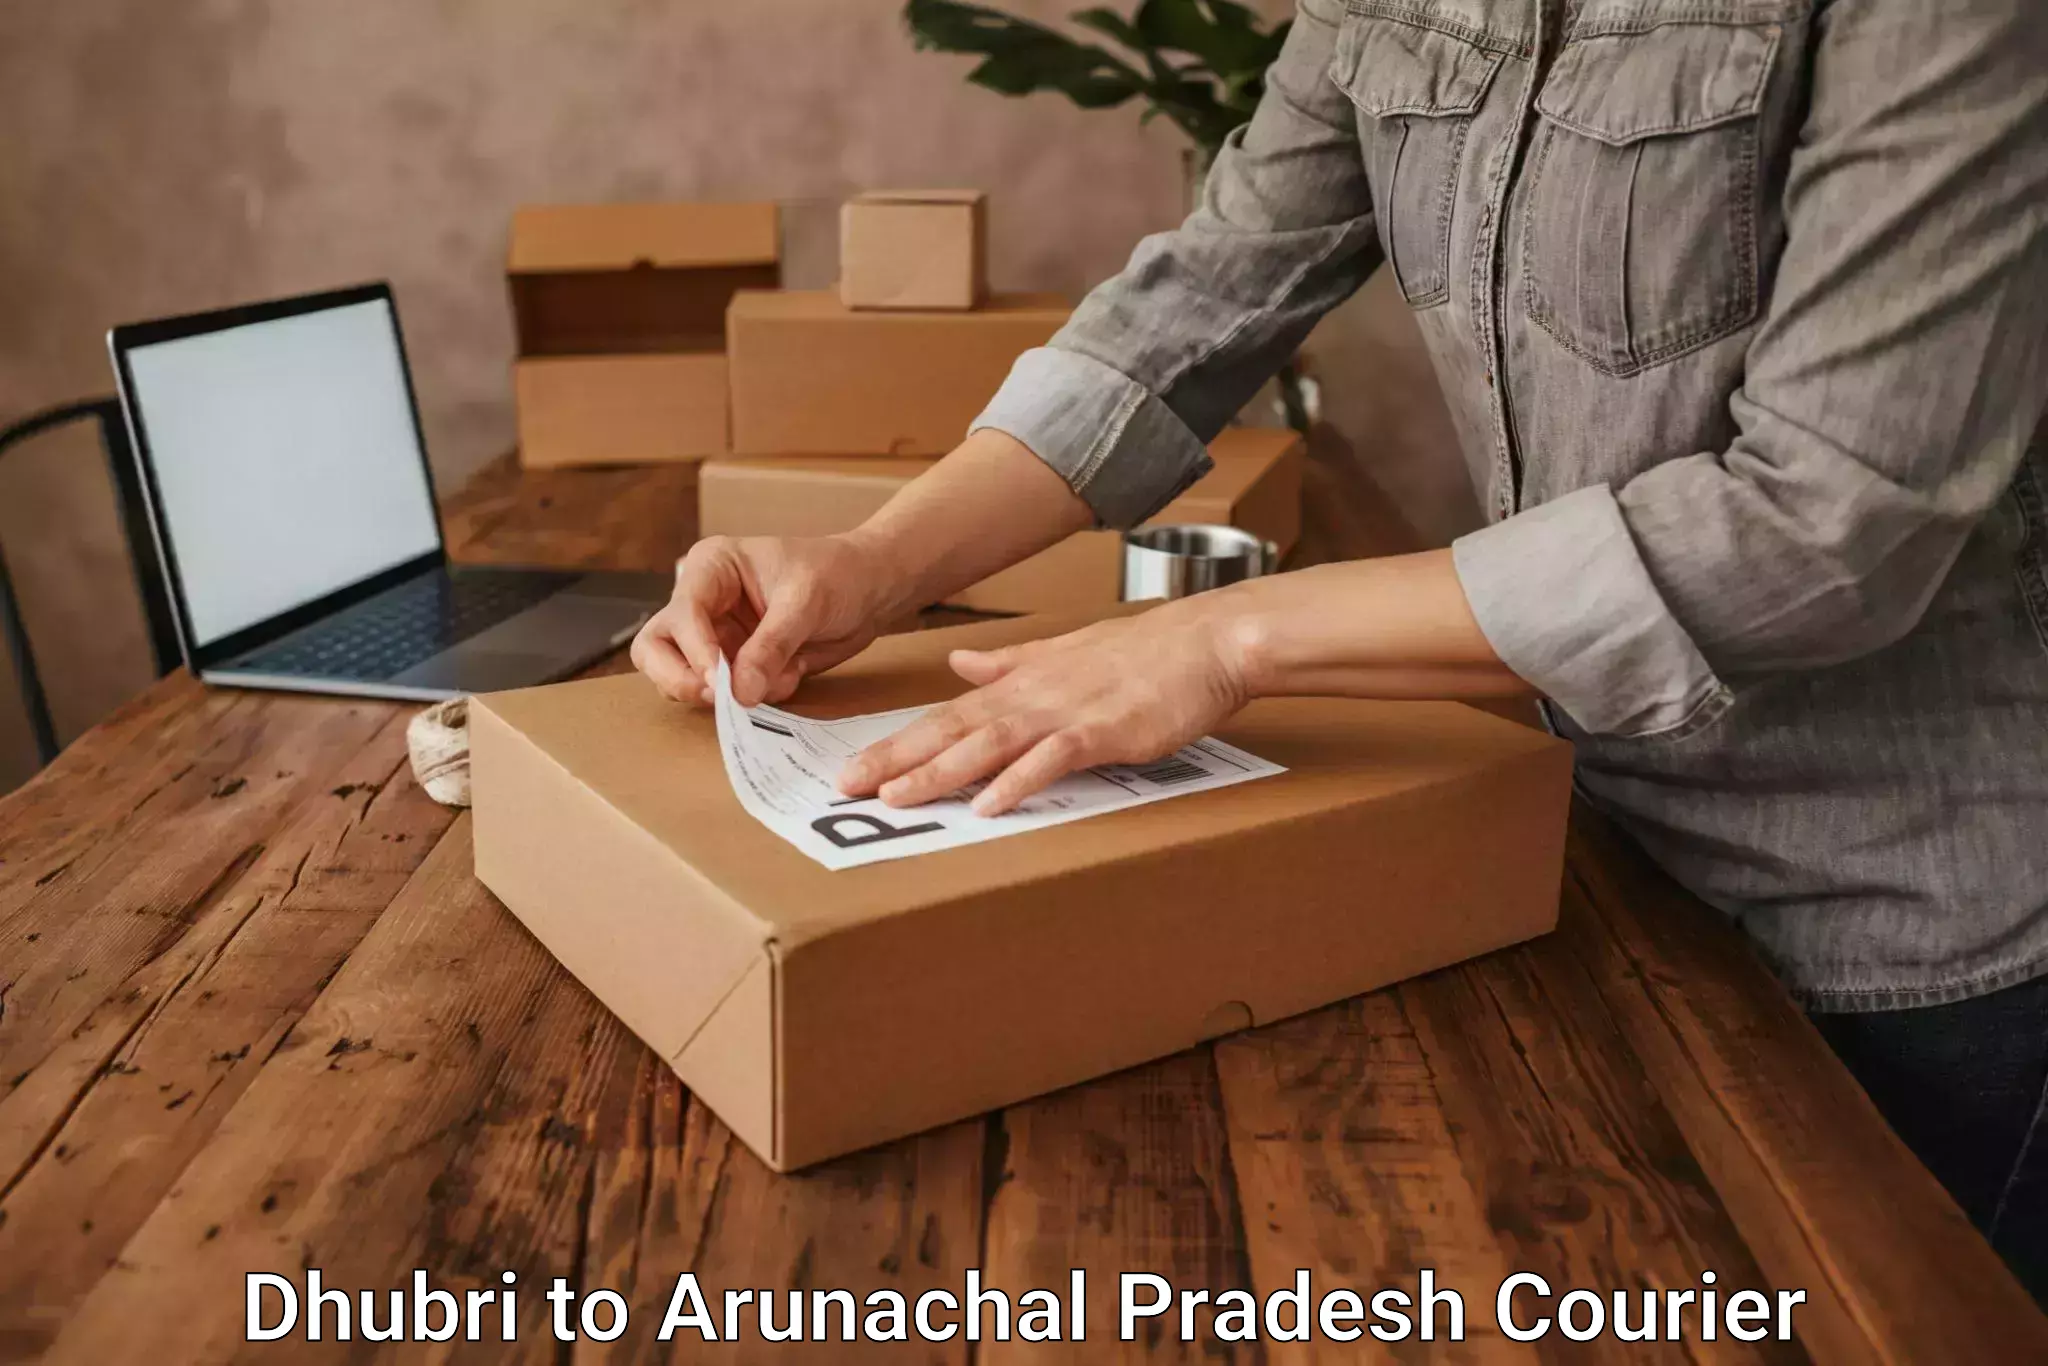 Modern courier technology Dhubri to Nirjuli